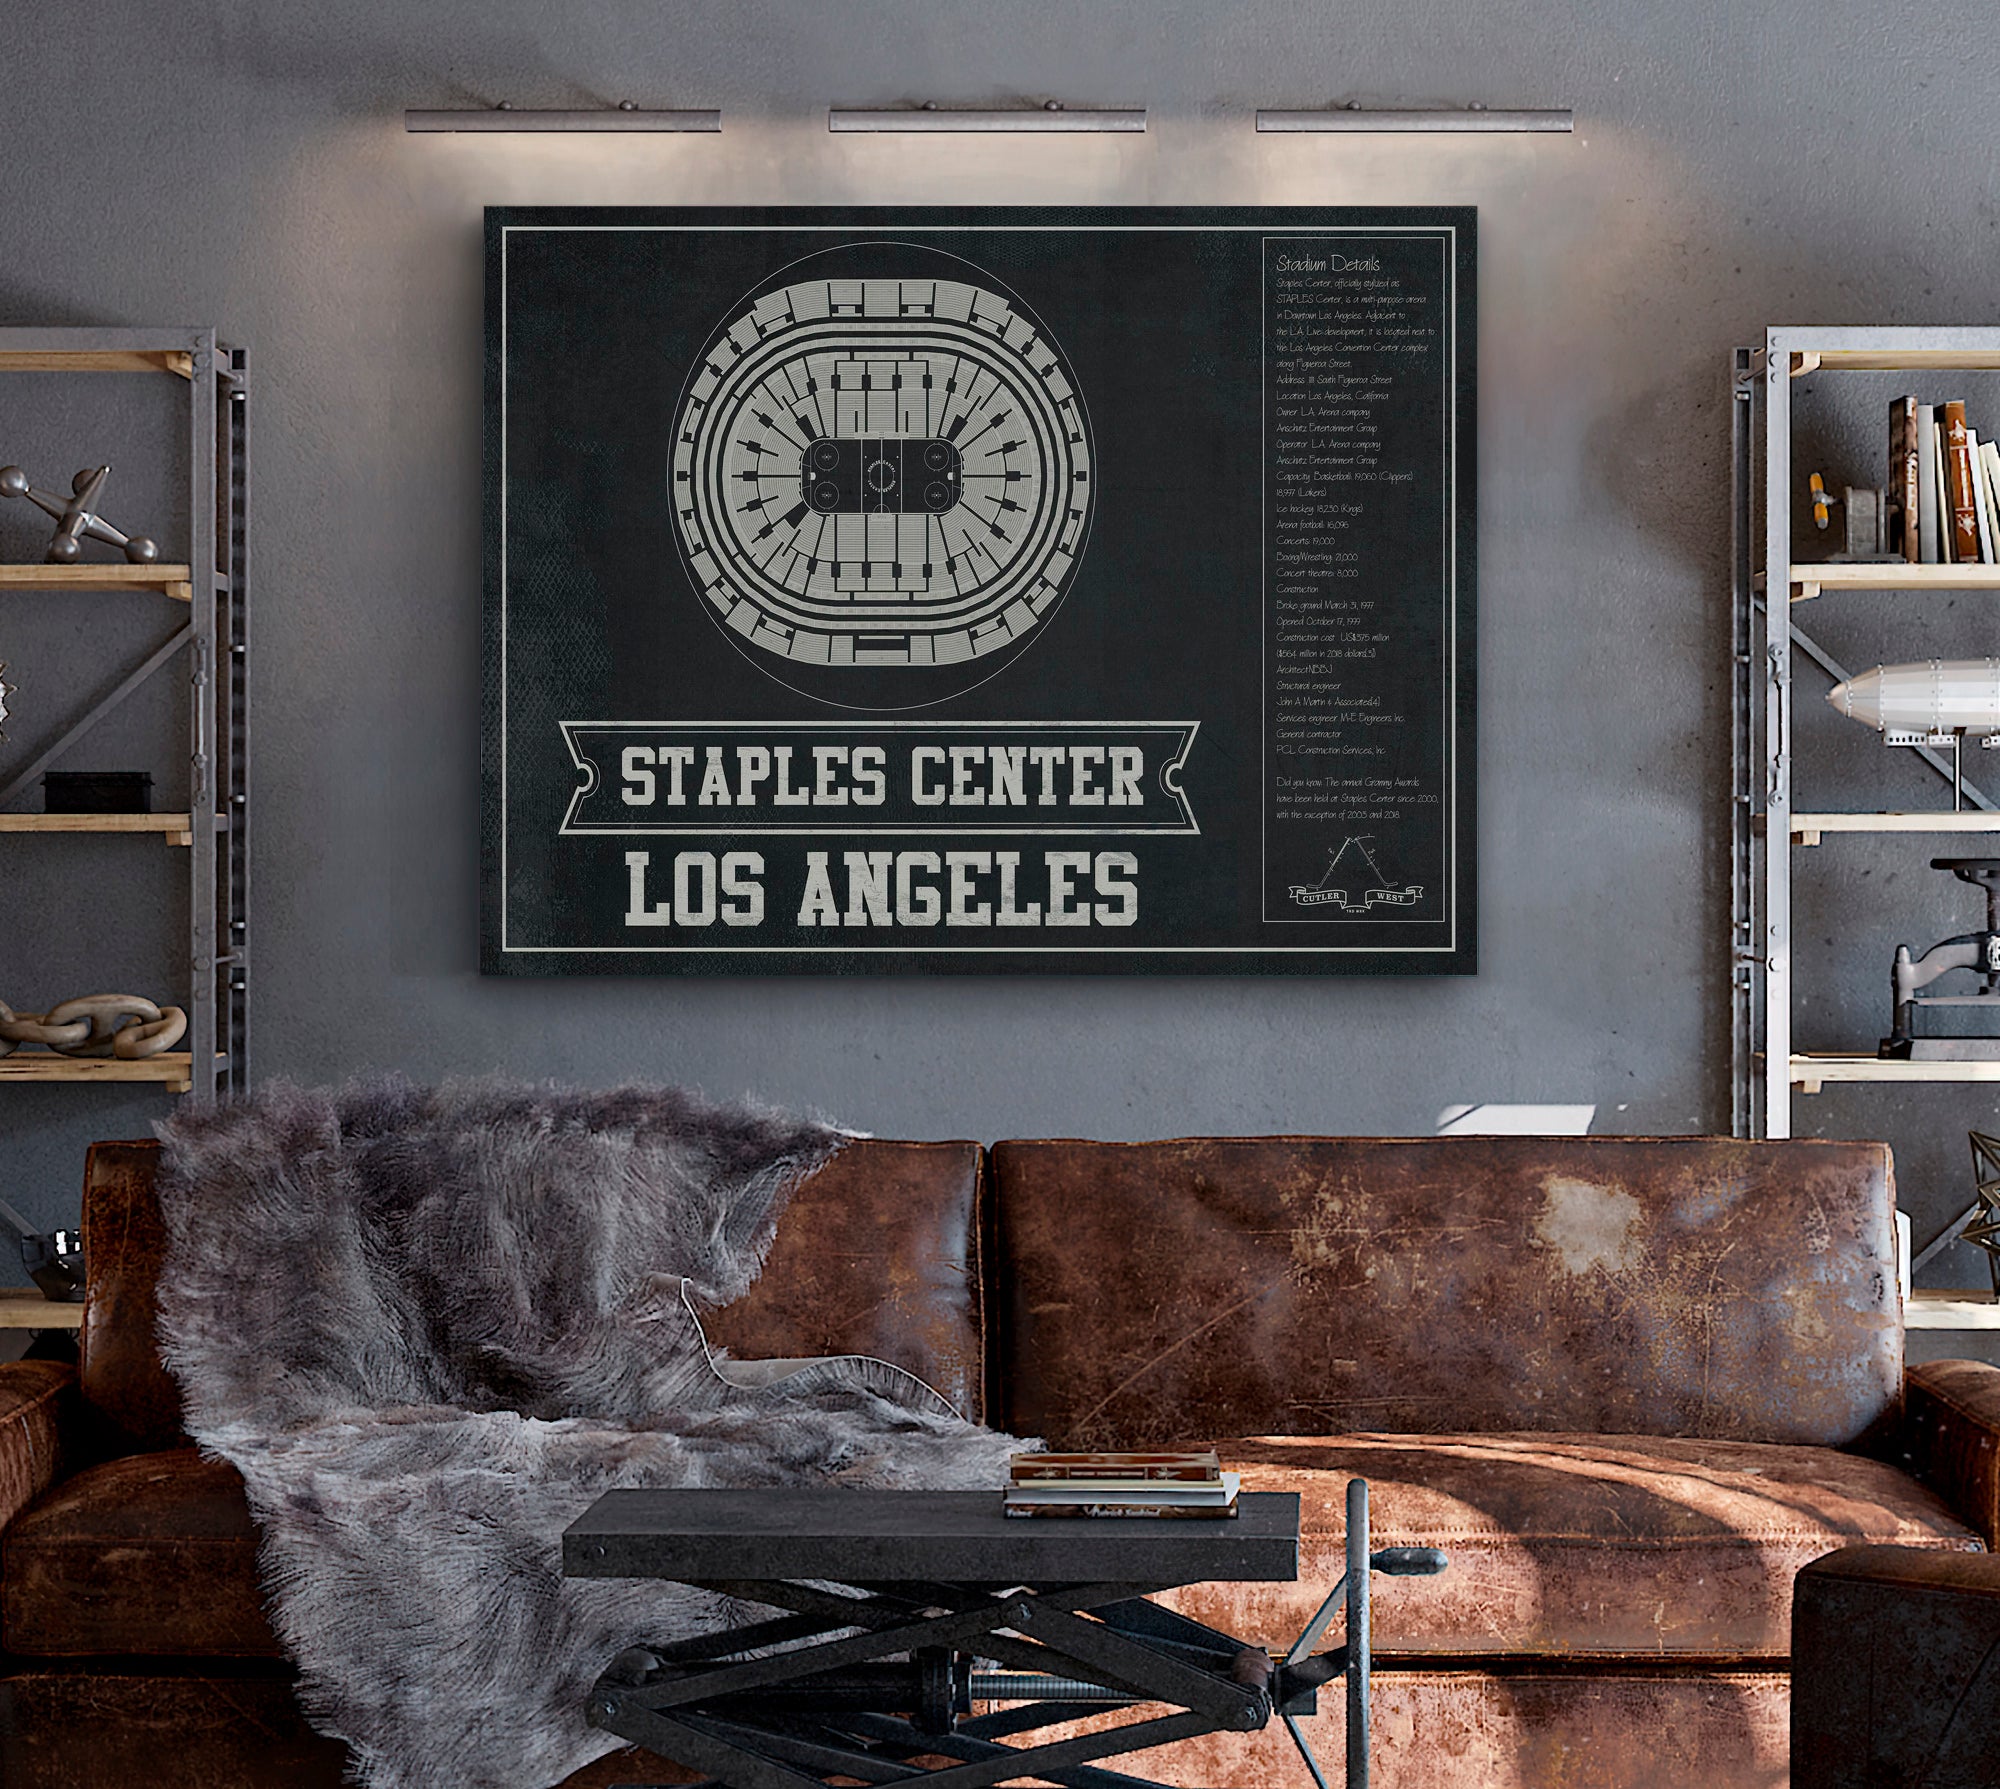 Los Angeles Kings Team Colors - Staples Center (Crypto.com Arena) Vintage Hockey Blueprint NHL Print